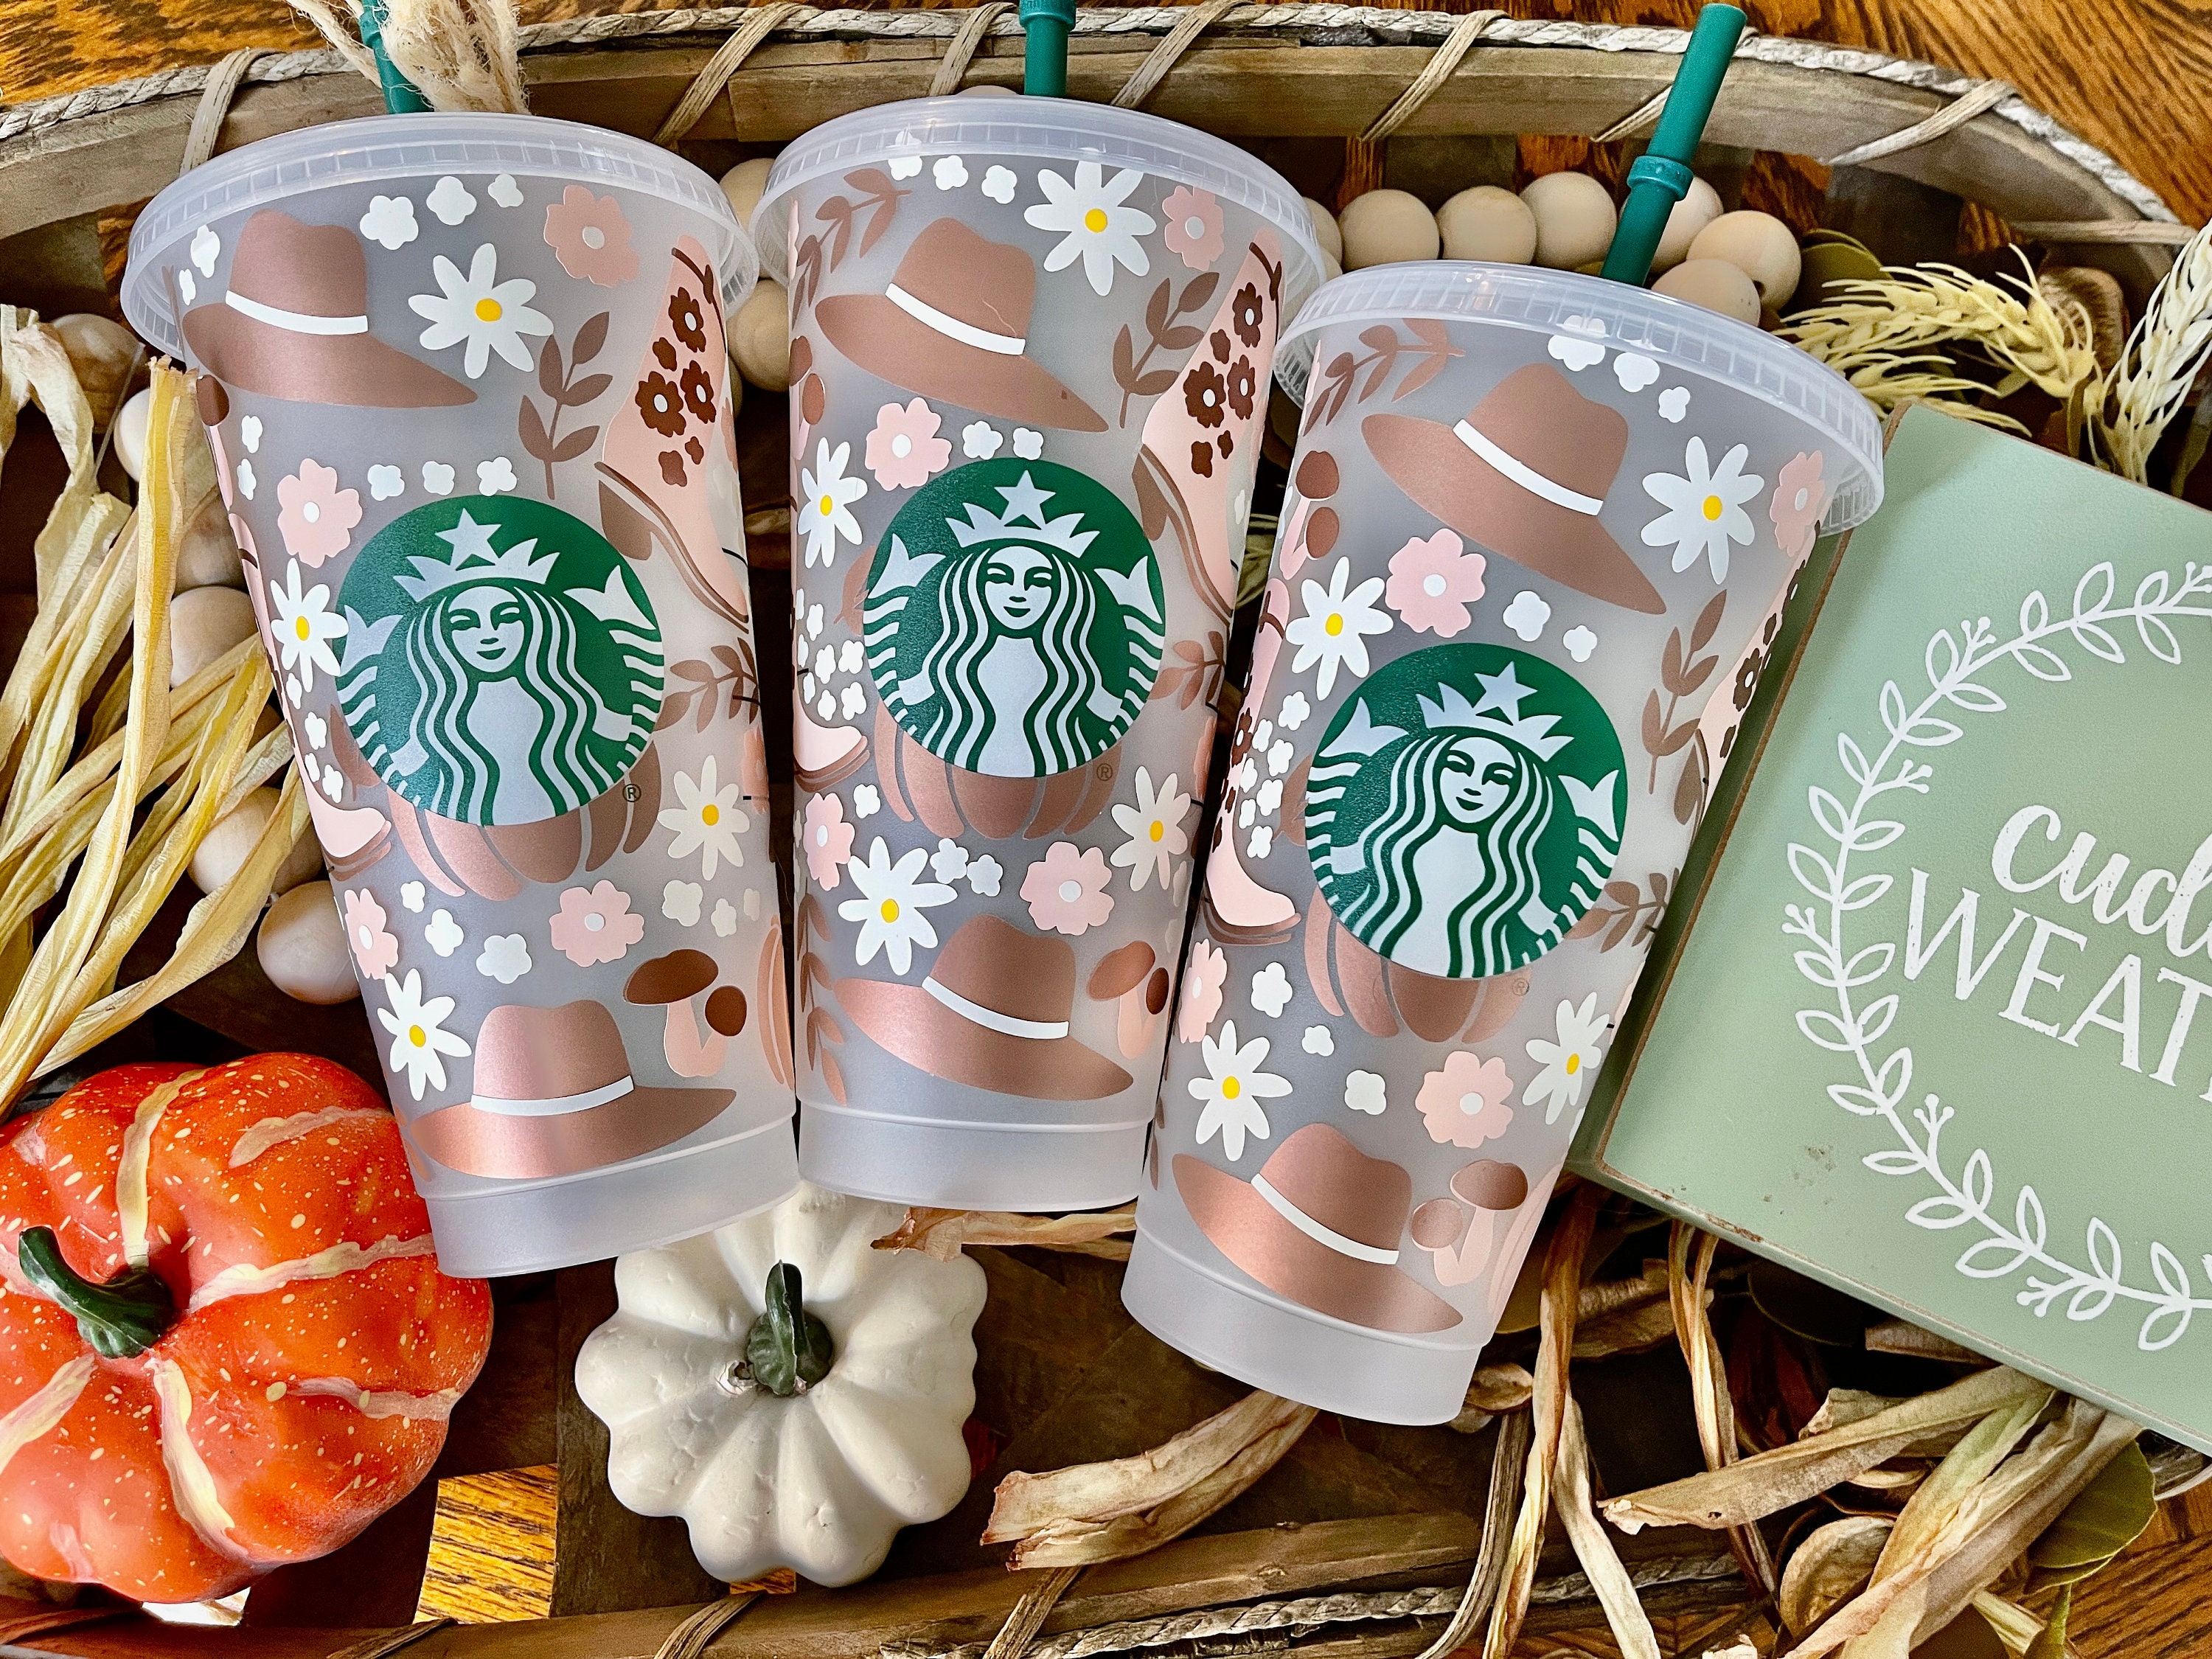 Starbucks Cold Cup Venti and Grande Starbucks Cups Retro Pumpkin Mouse Ears  Halloween Theme Pastel Color Tumbler 